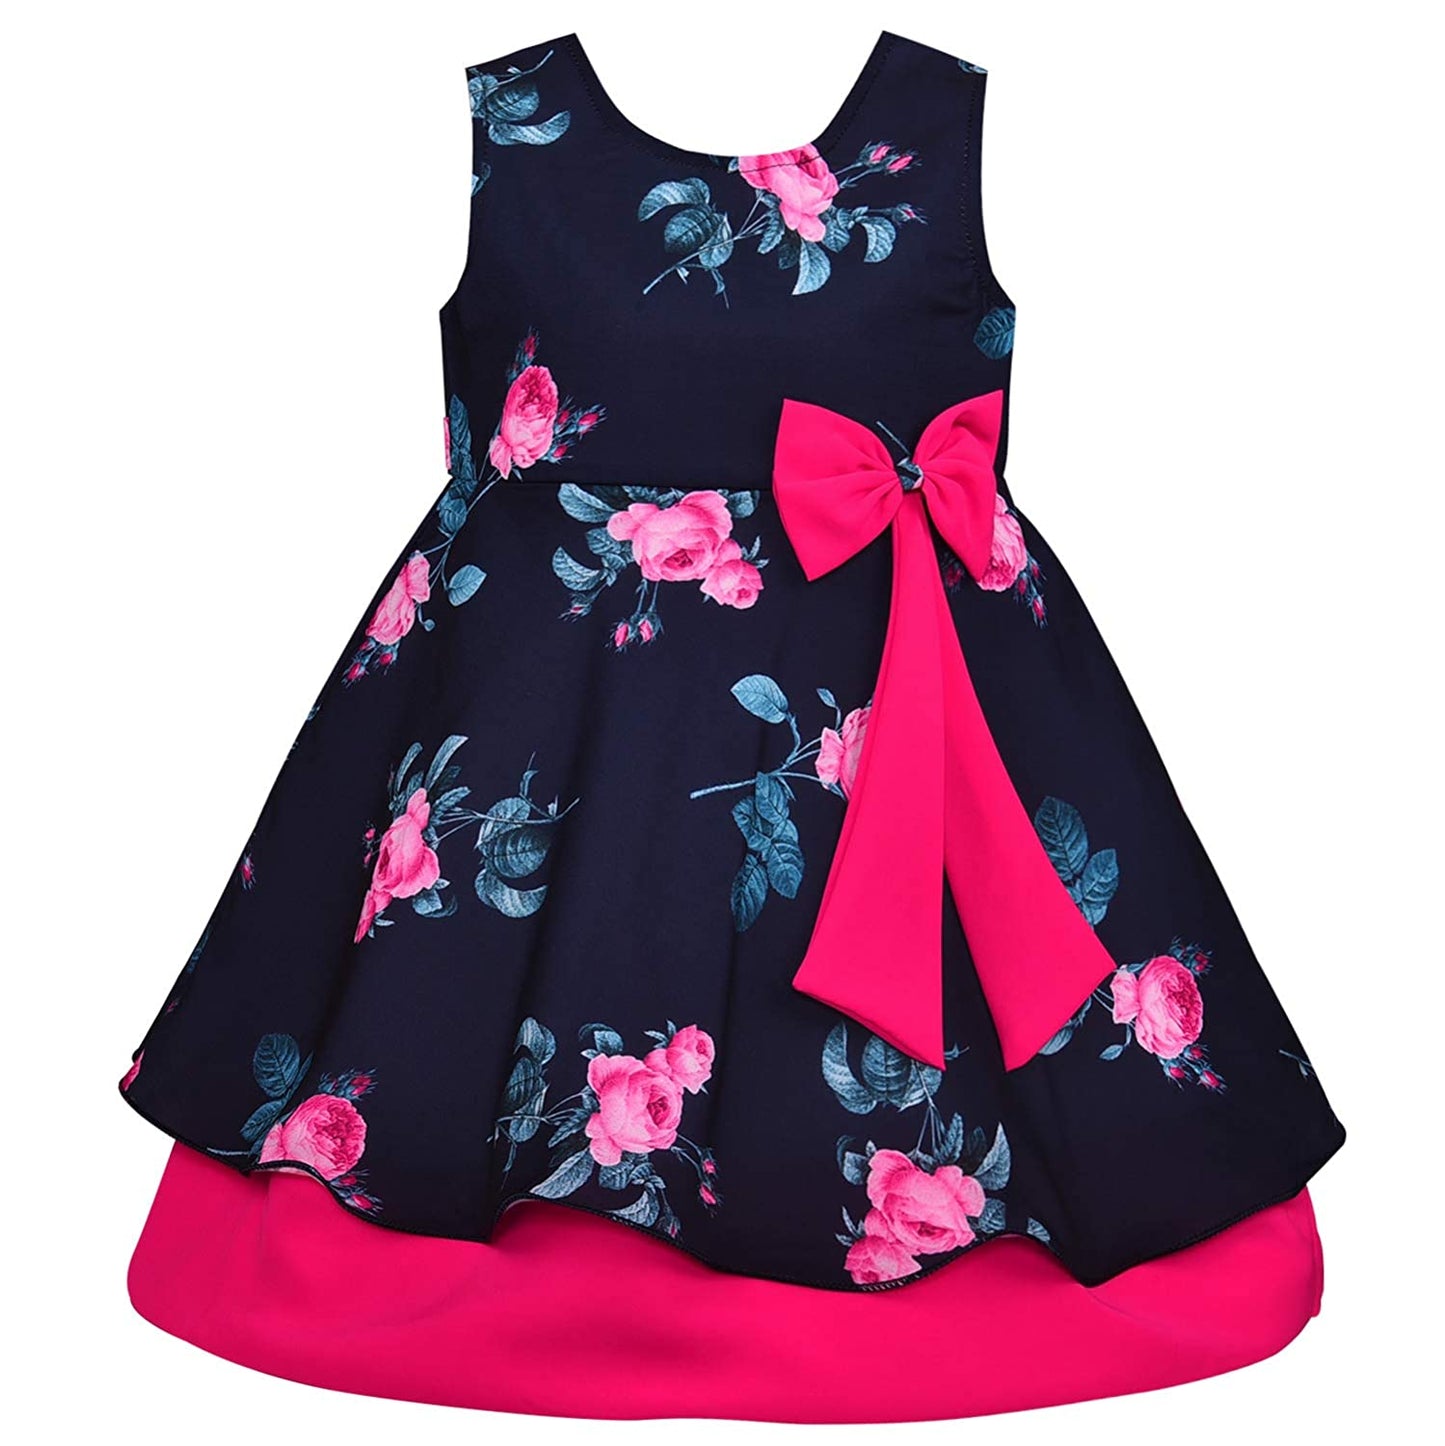 Baby Girls Dress Frocks-stn736pnk - Wish Karo Party Wear - frocks Party Wear - baby dress